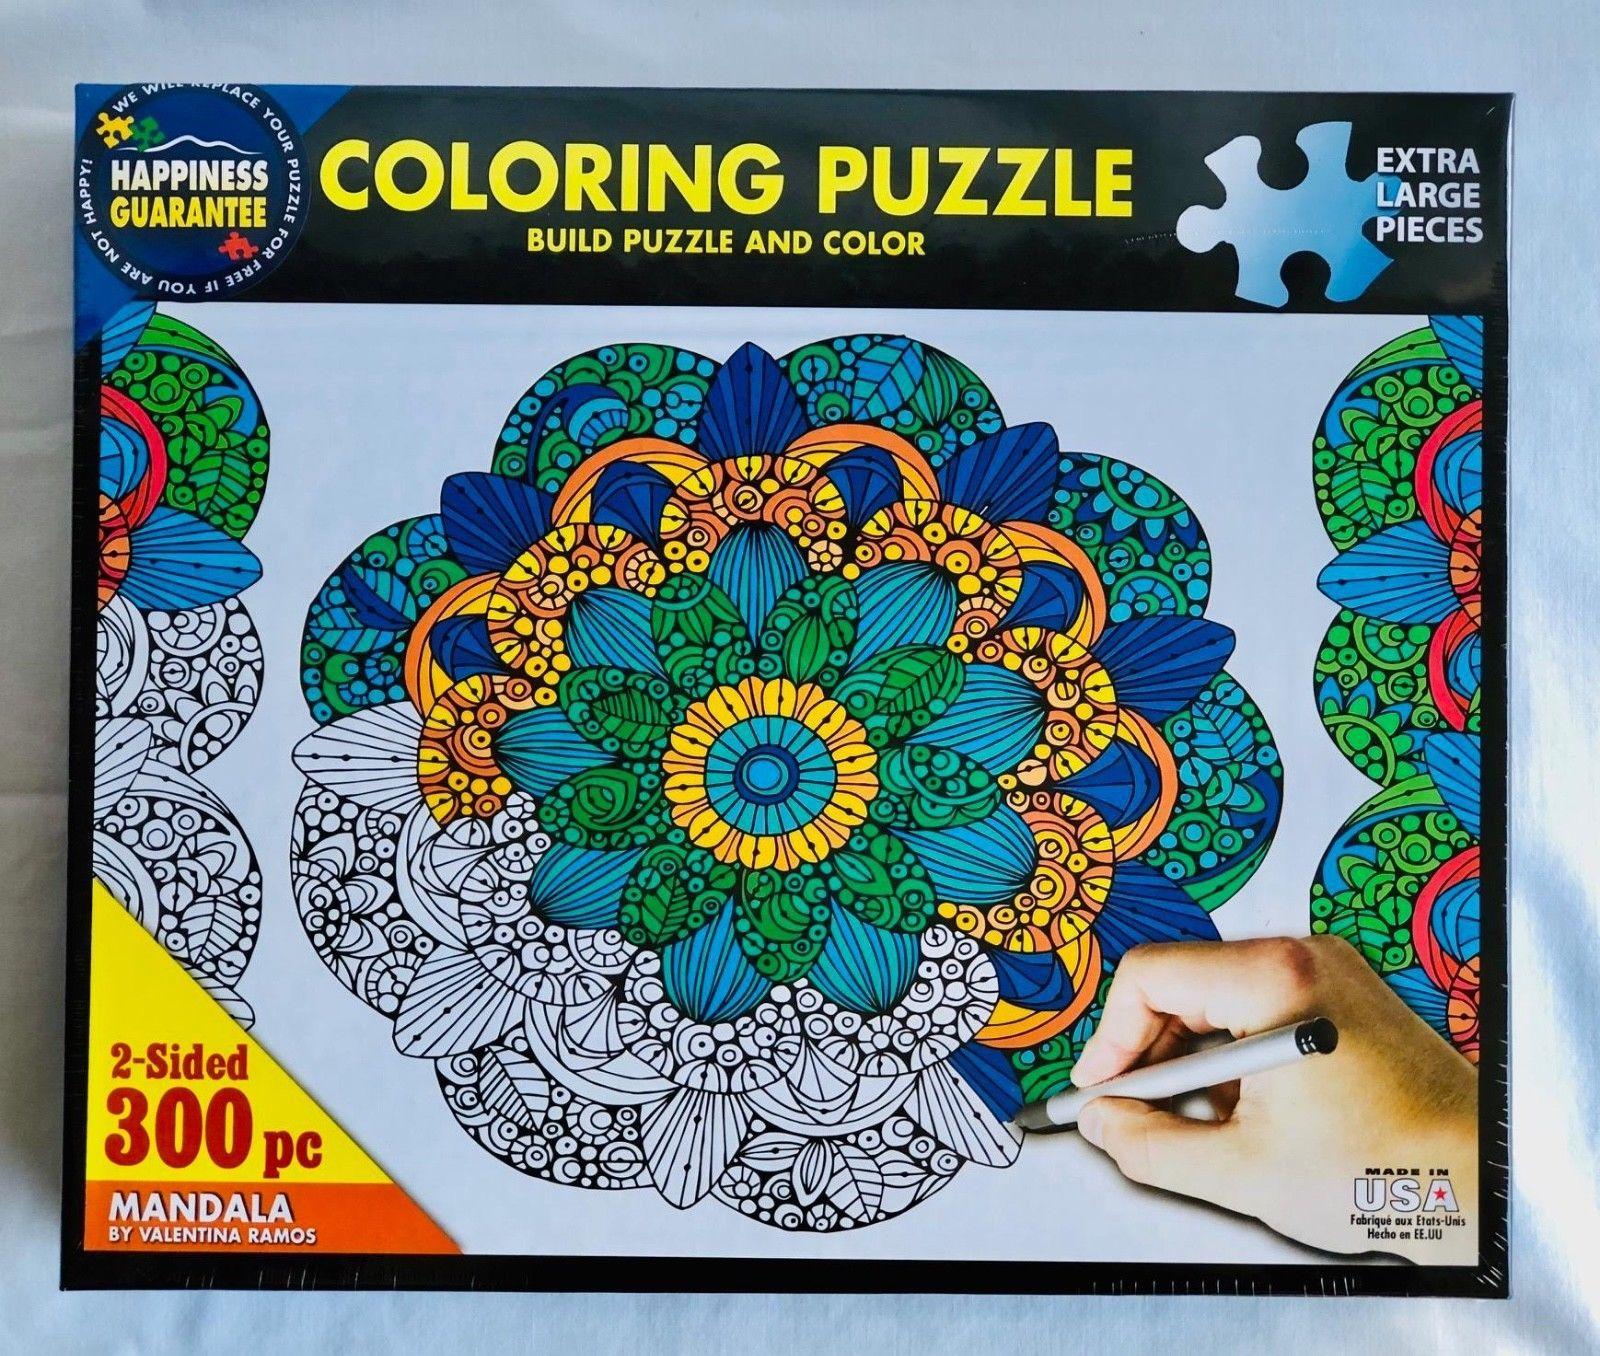 Blue Circle with White Mountain Logo - White Mountain Puzzles Mandala 300 Piece 2 Sided Coloring Jigsaw ...